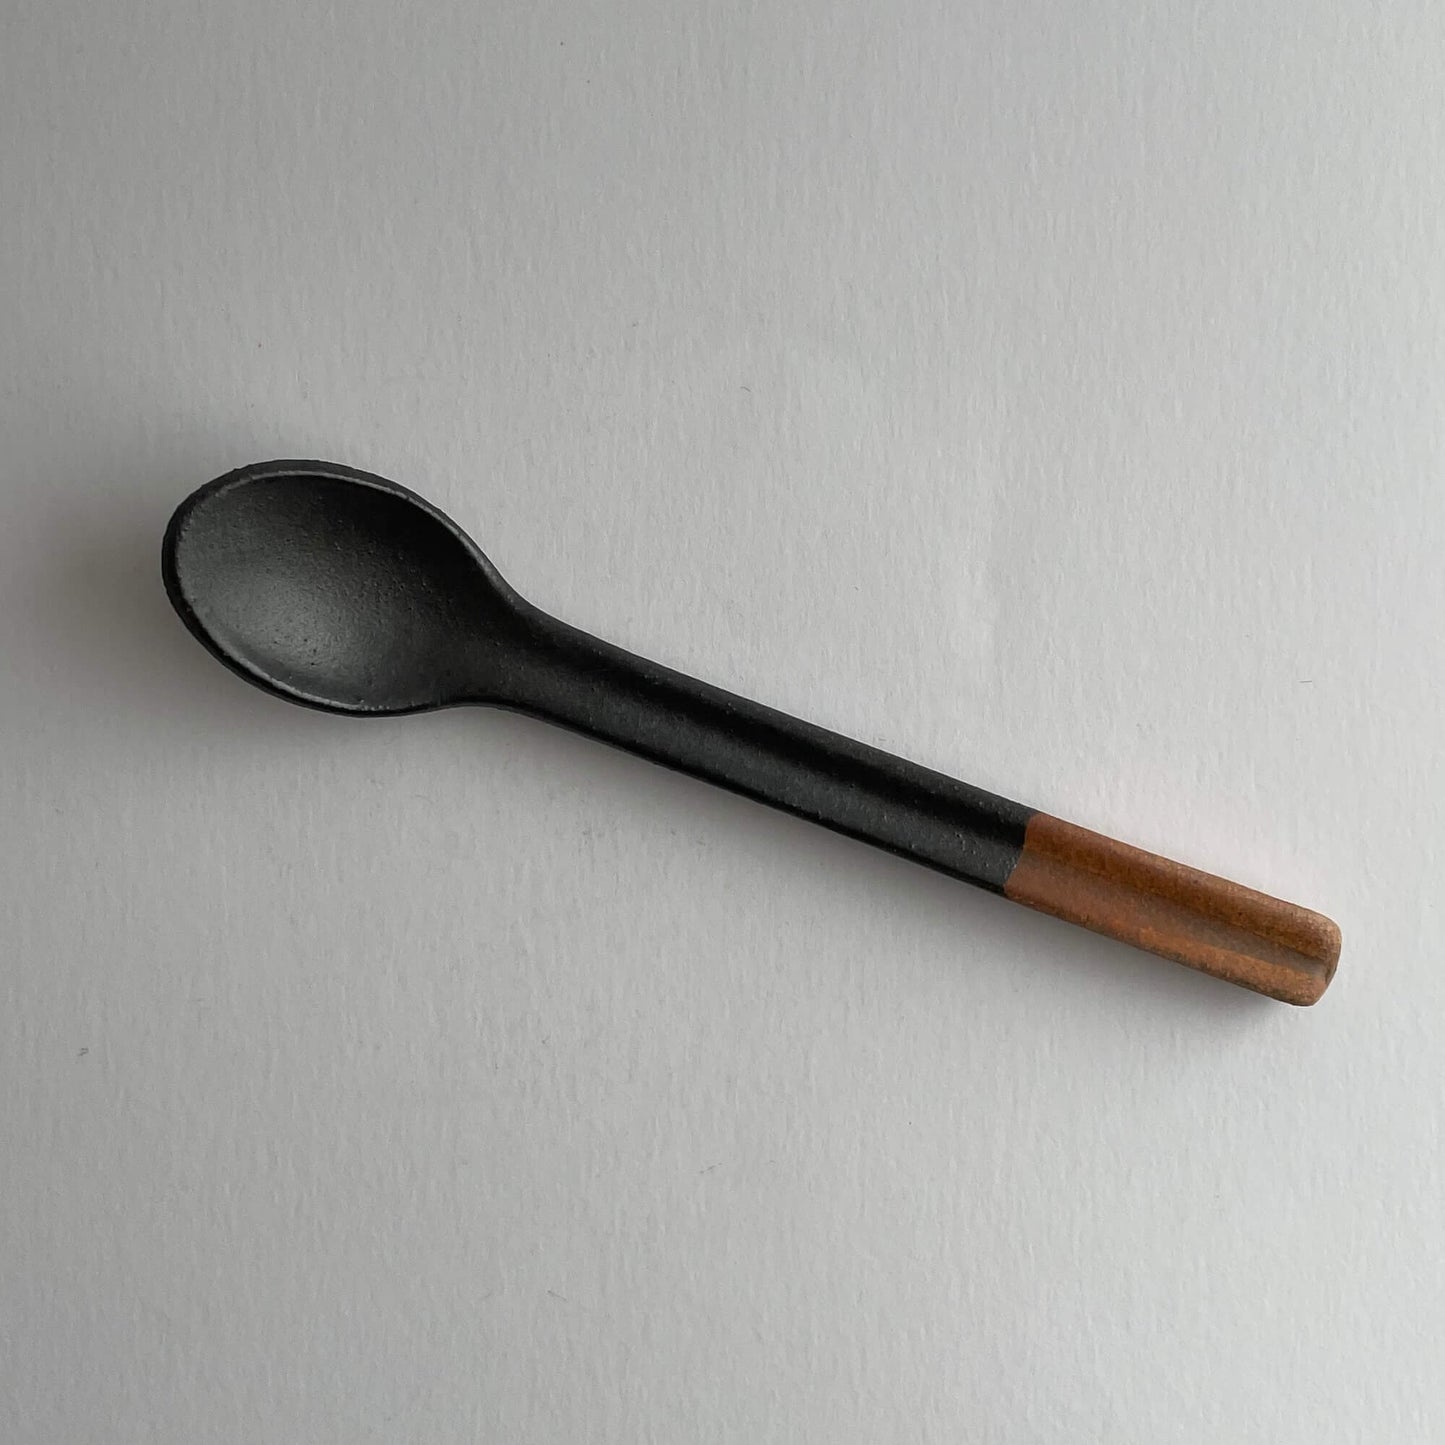 hechimon : shigaraki-ware ceramic spoon